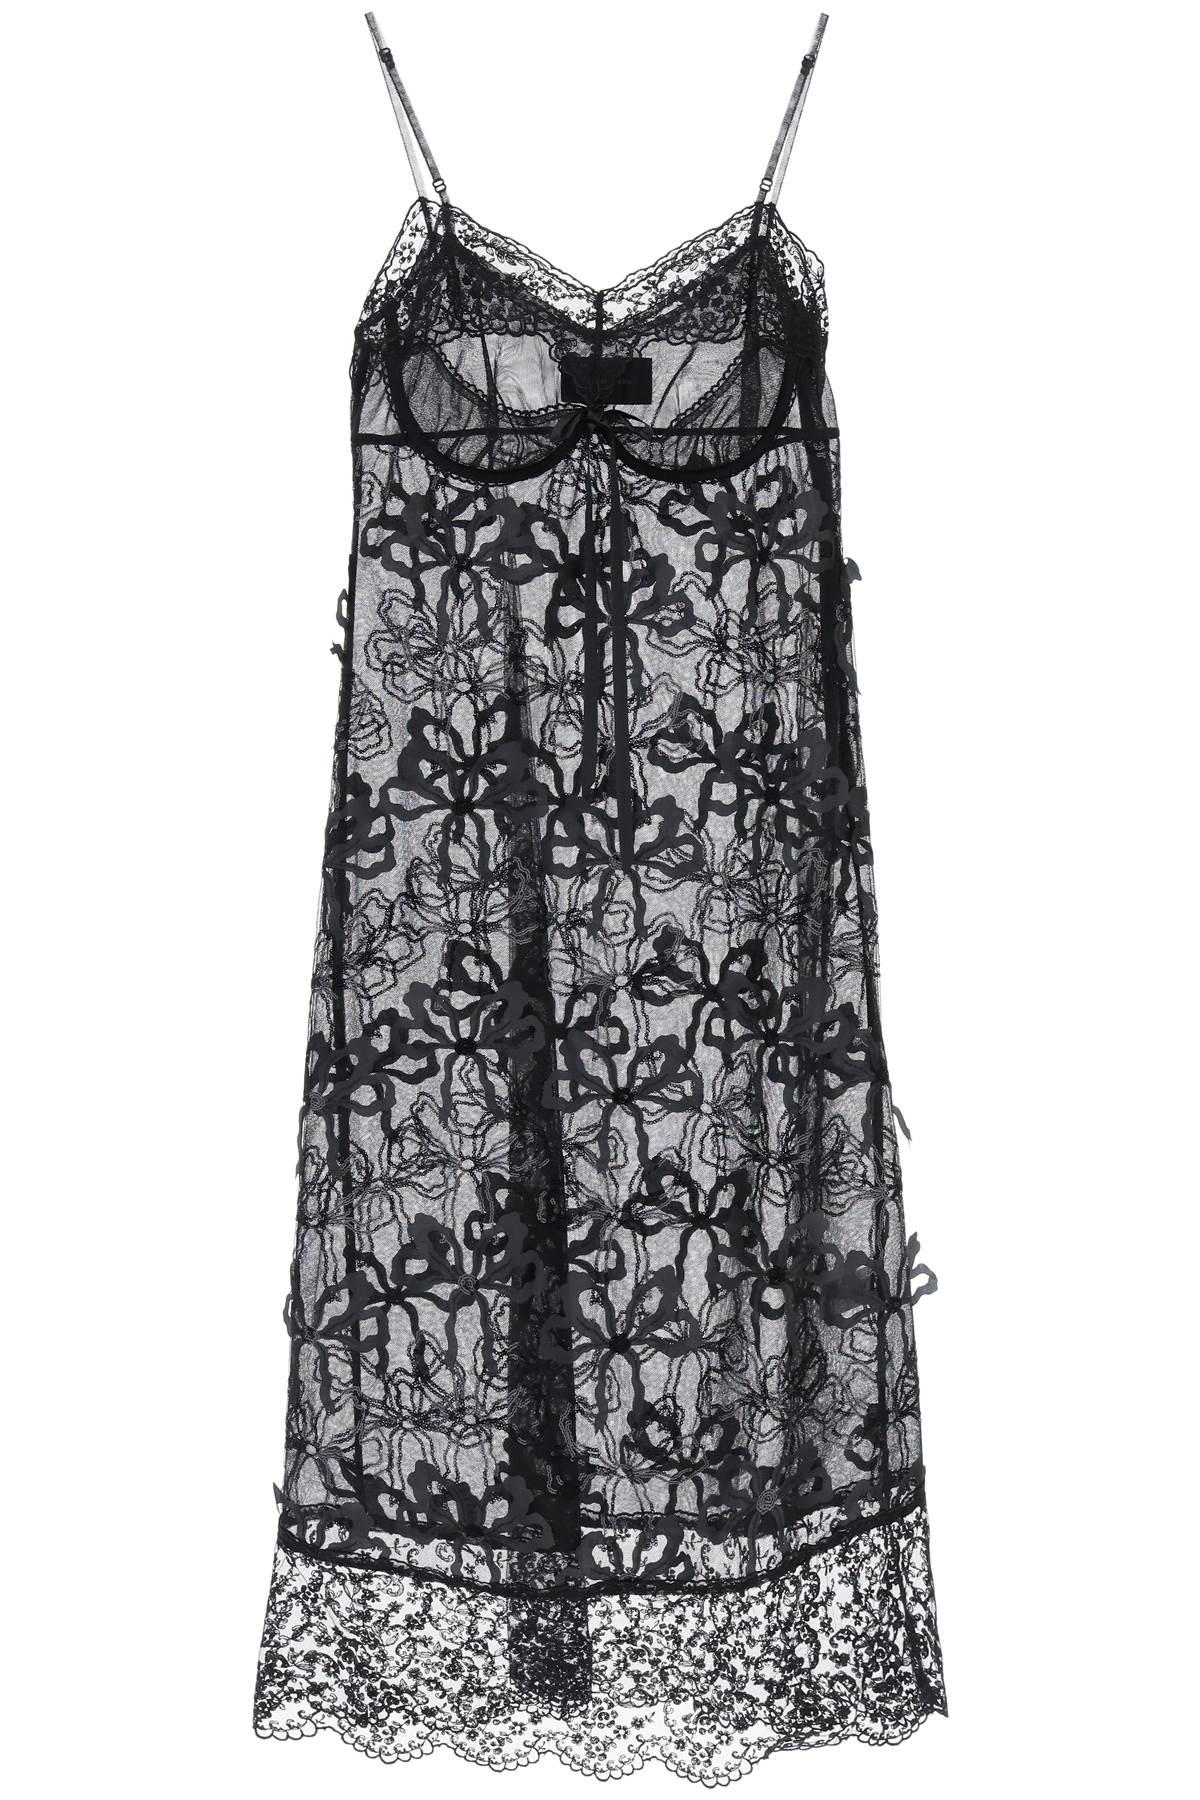 Romantic & Sensual Embroidered Tulle Slip Dress for Women